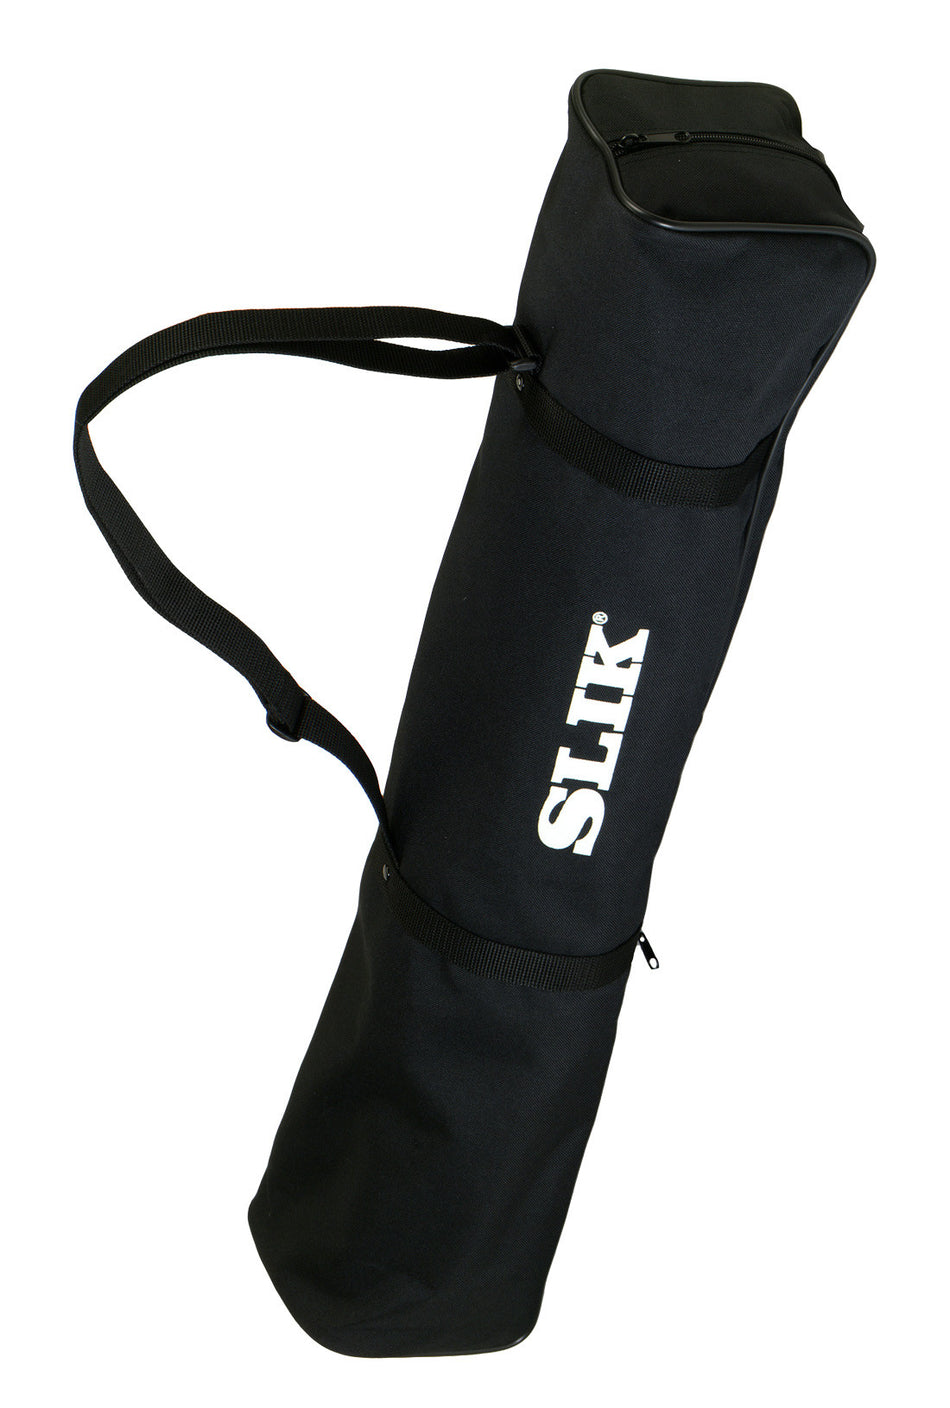 SLIK Tripod Bag [Two Size Options]